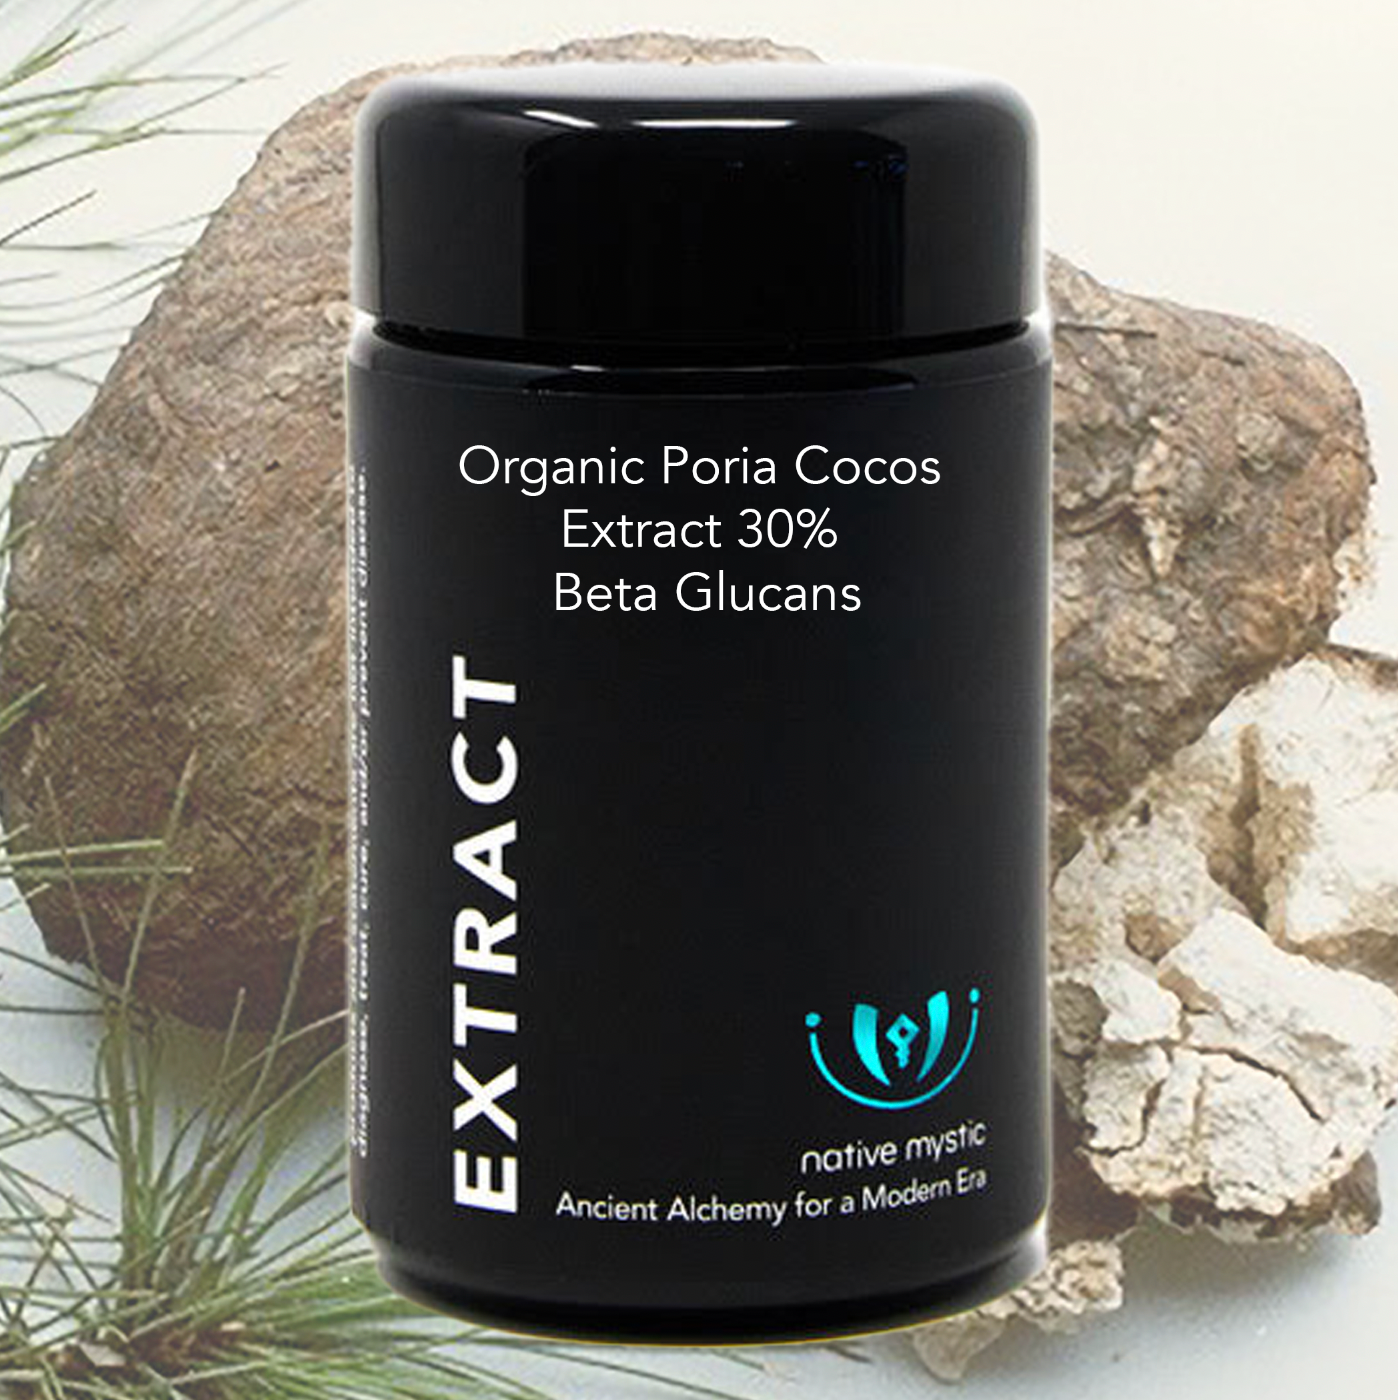 Organic Poria Cocos Extract 30% Beta Glucans